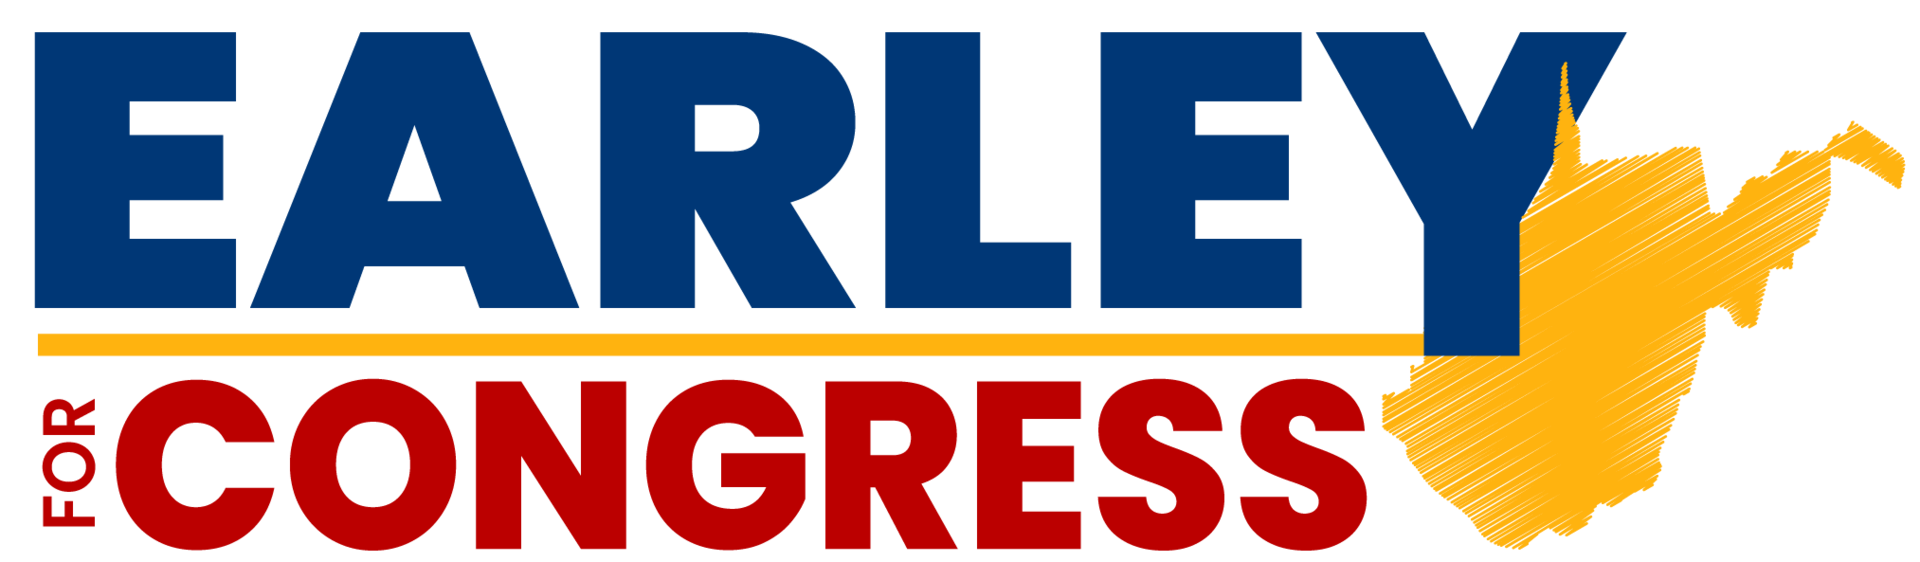 Revised logo